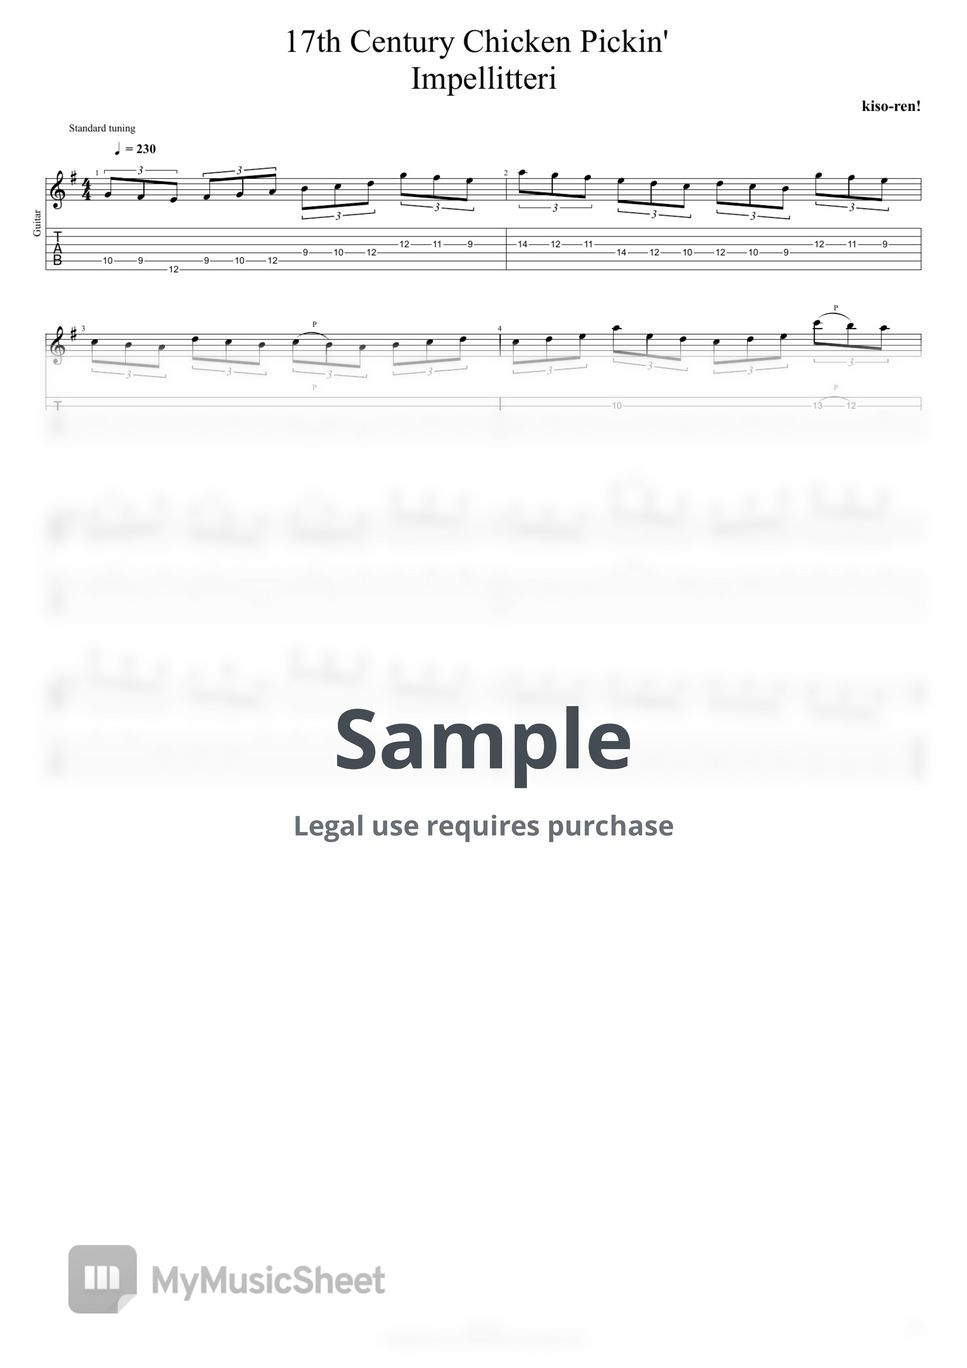 Impellitteri - 17th Century Chicken Pickin' - Impellitteri Intro Guitar Lesson (TAB PDF & Guitar Pro files.（gp5）) by Technical Guitar